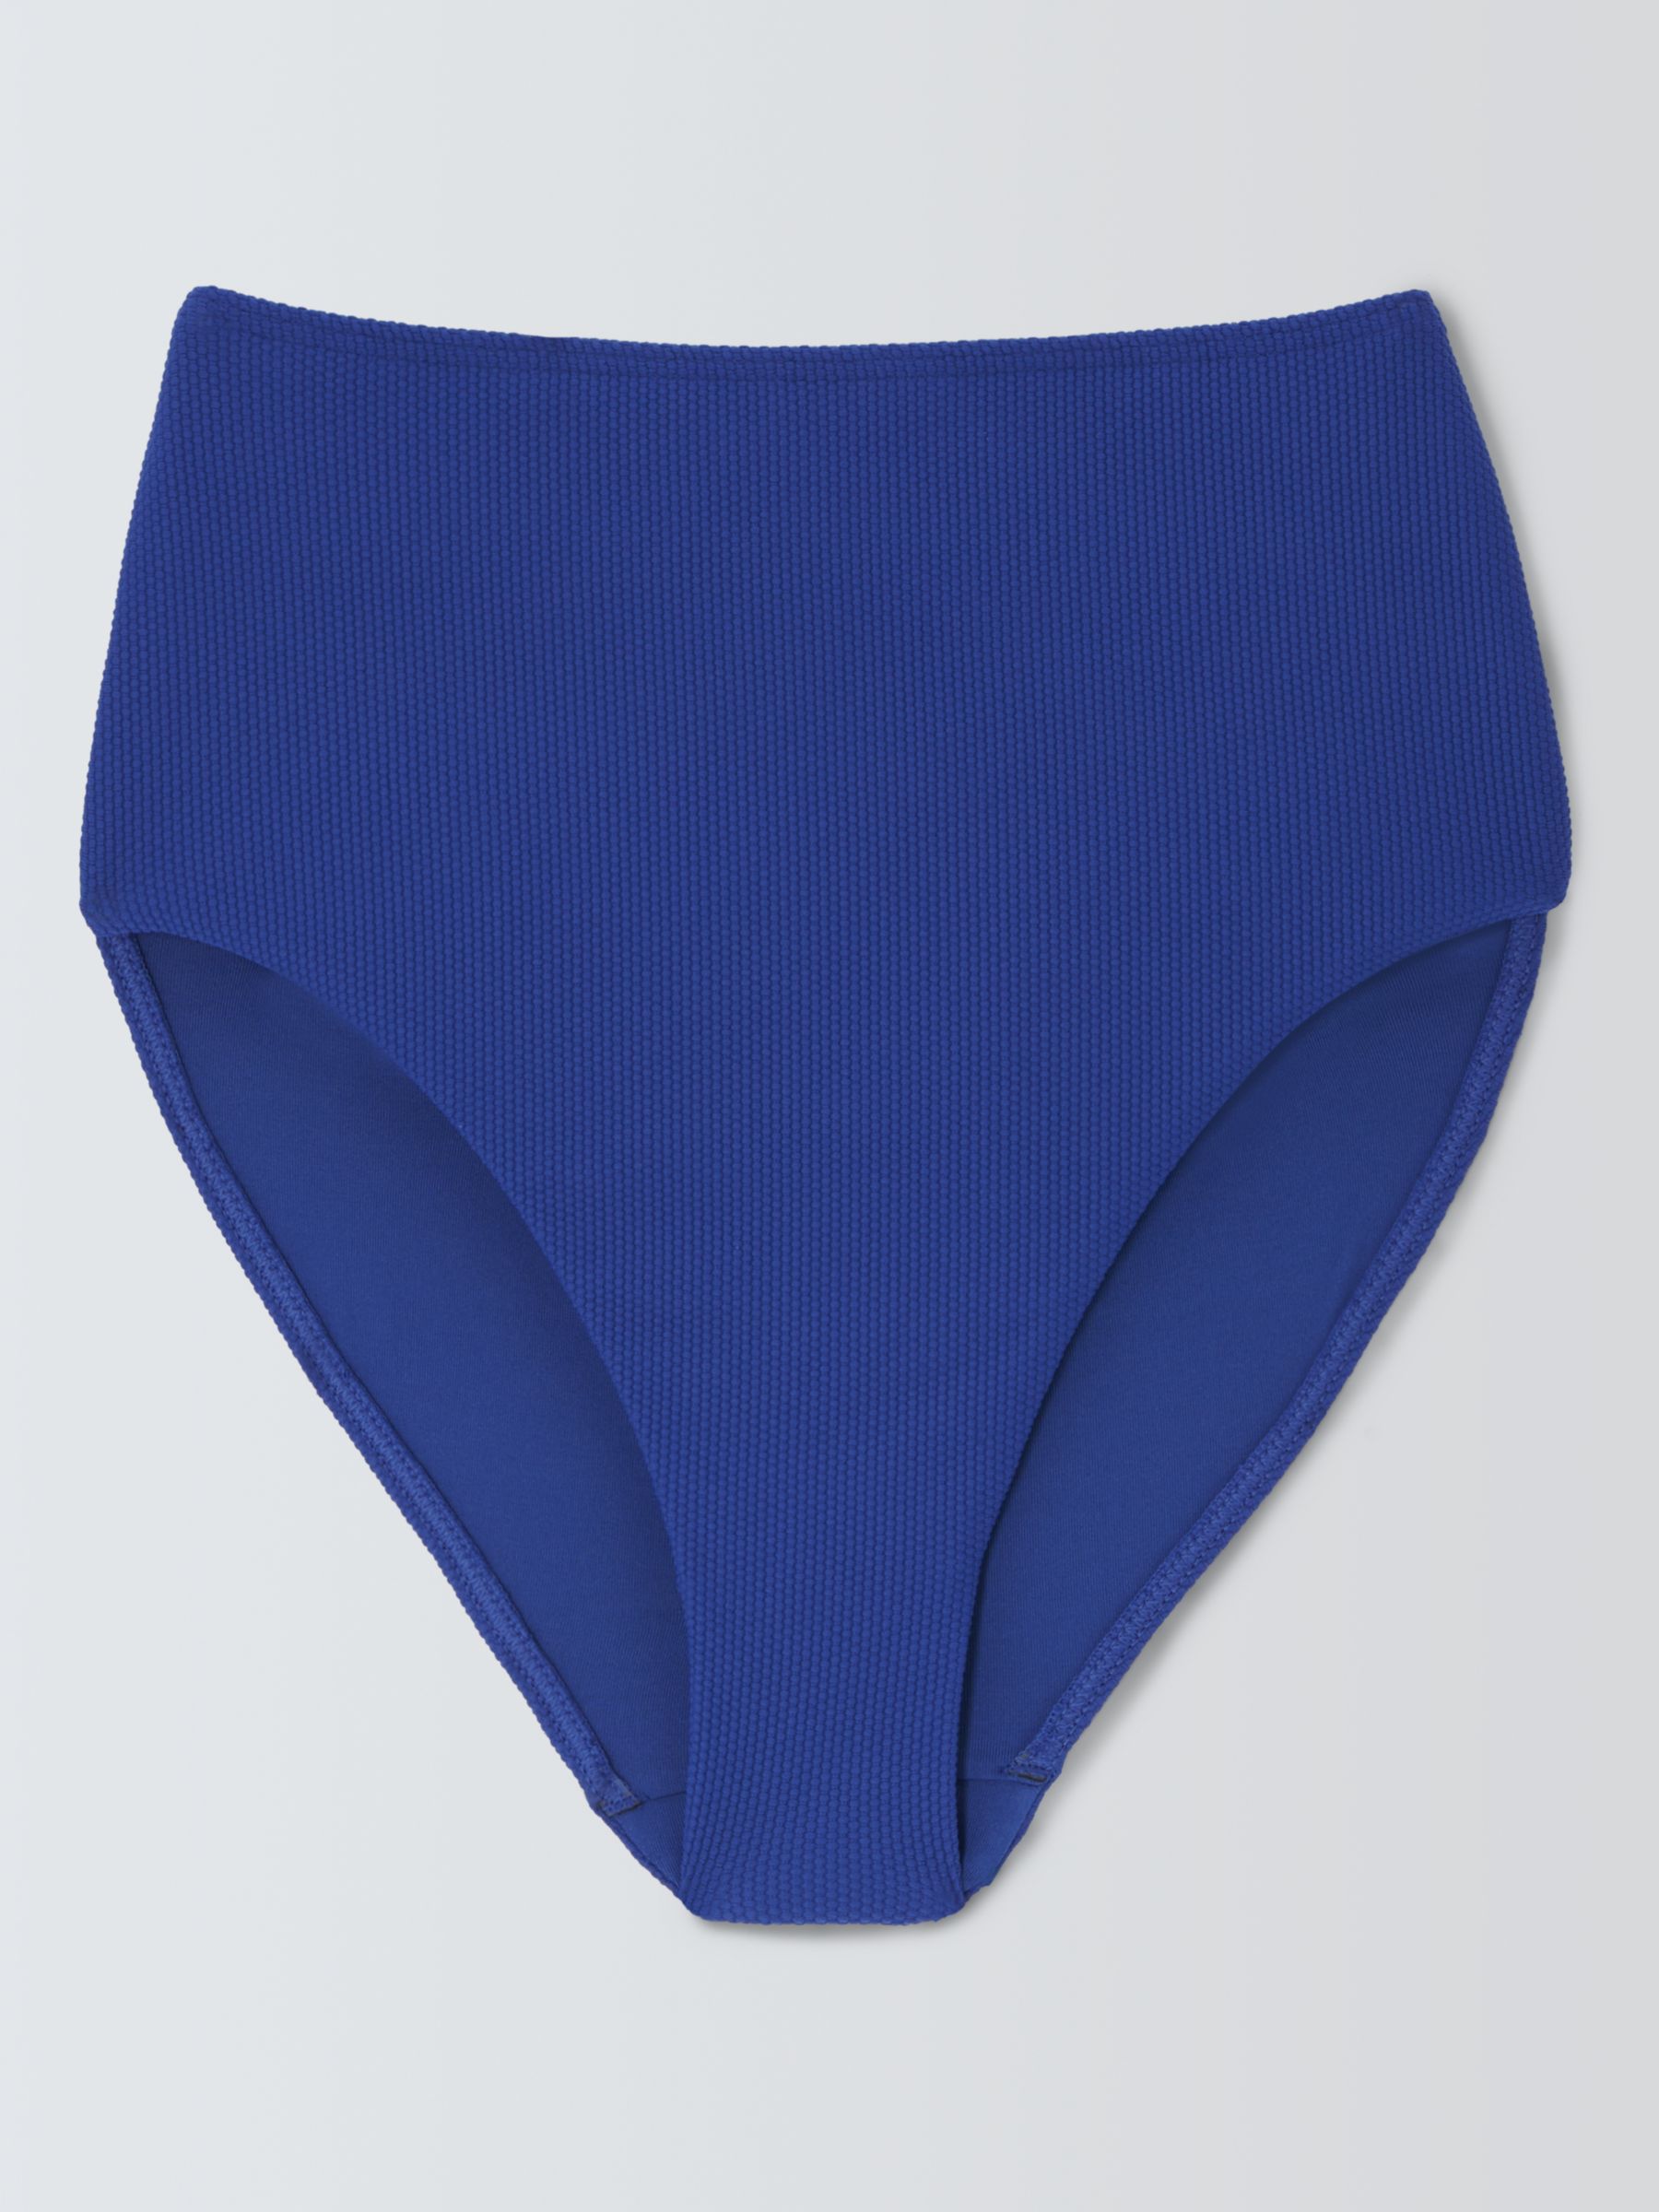 John Lewis Palma Textured High Waist Bikini Bottoms, Blue, 10